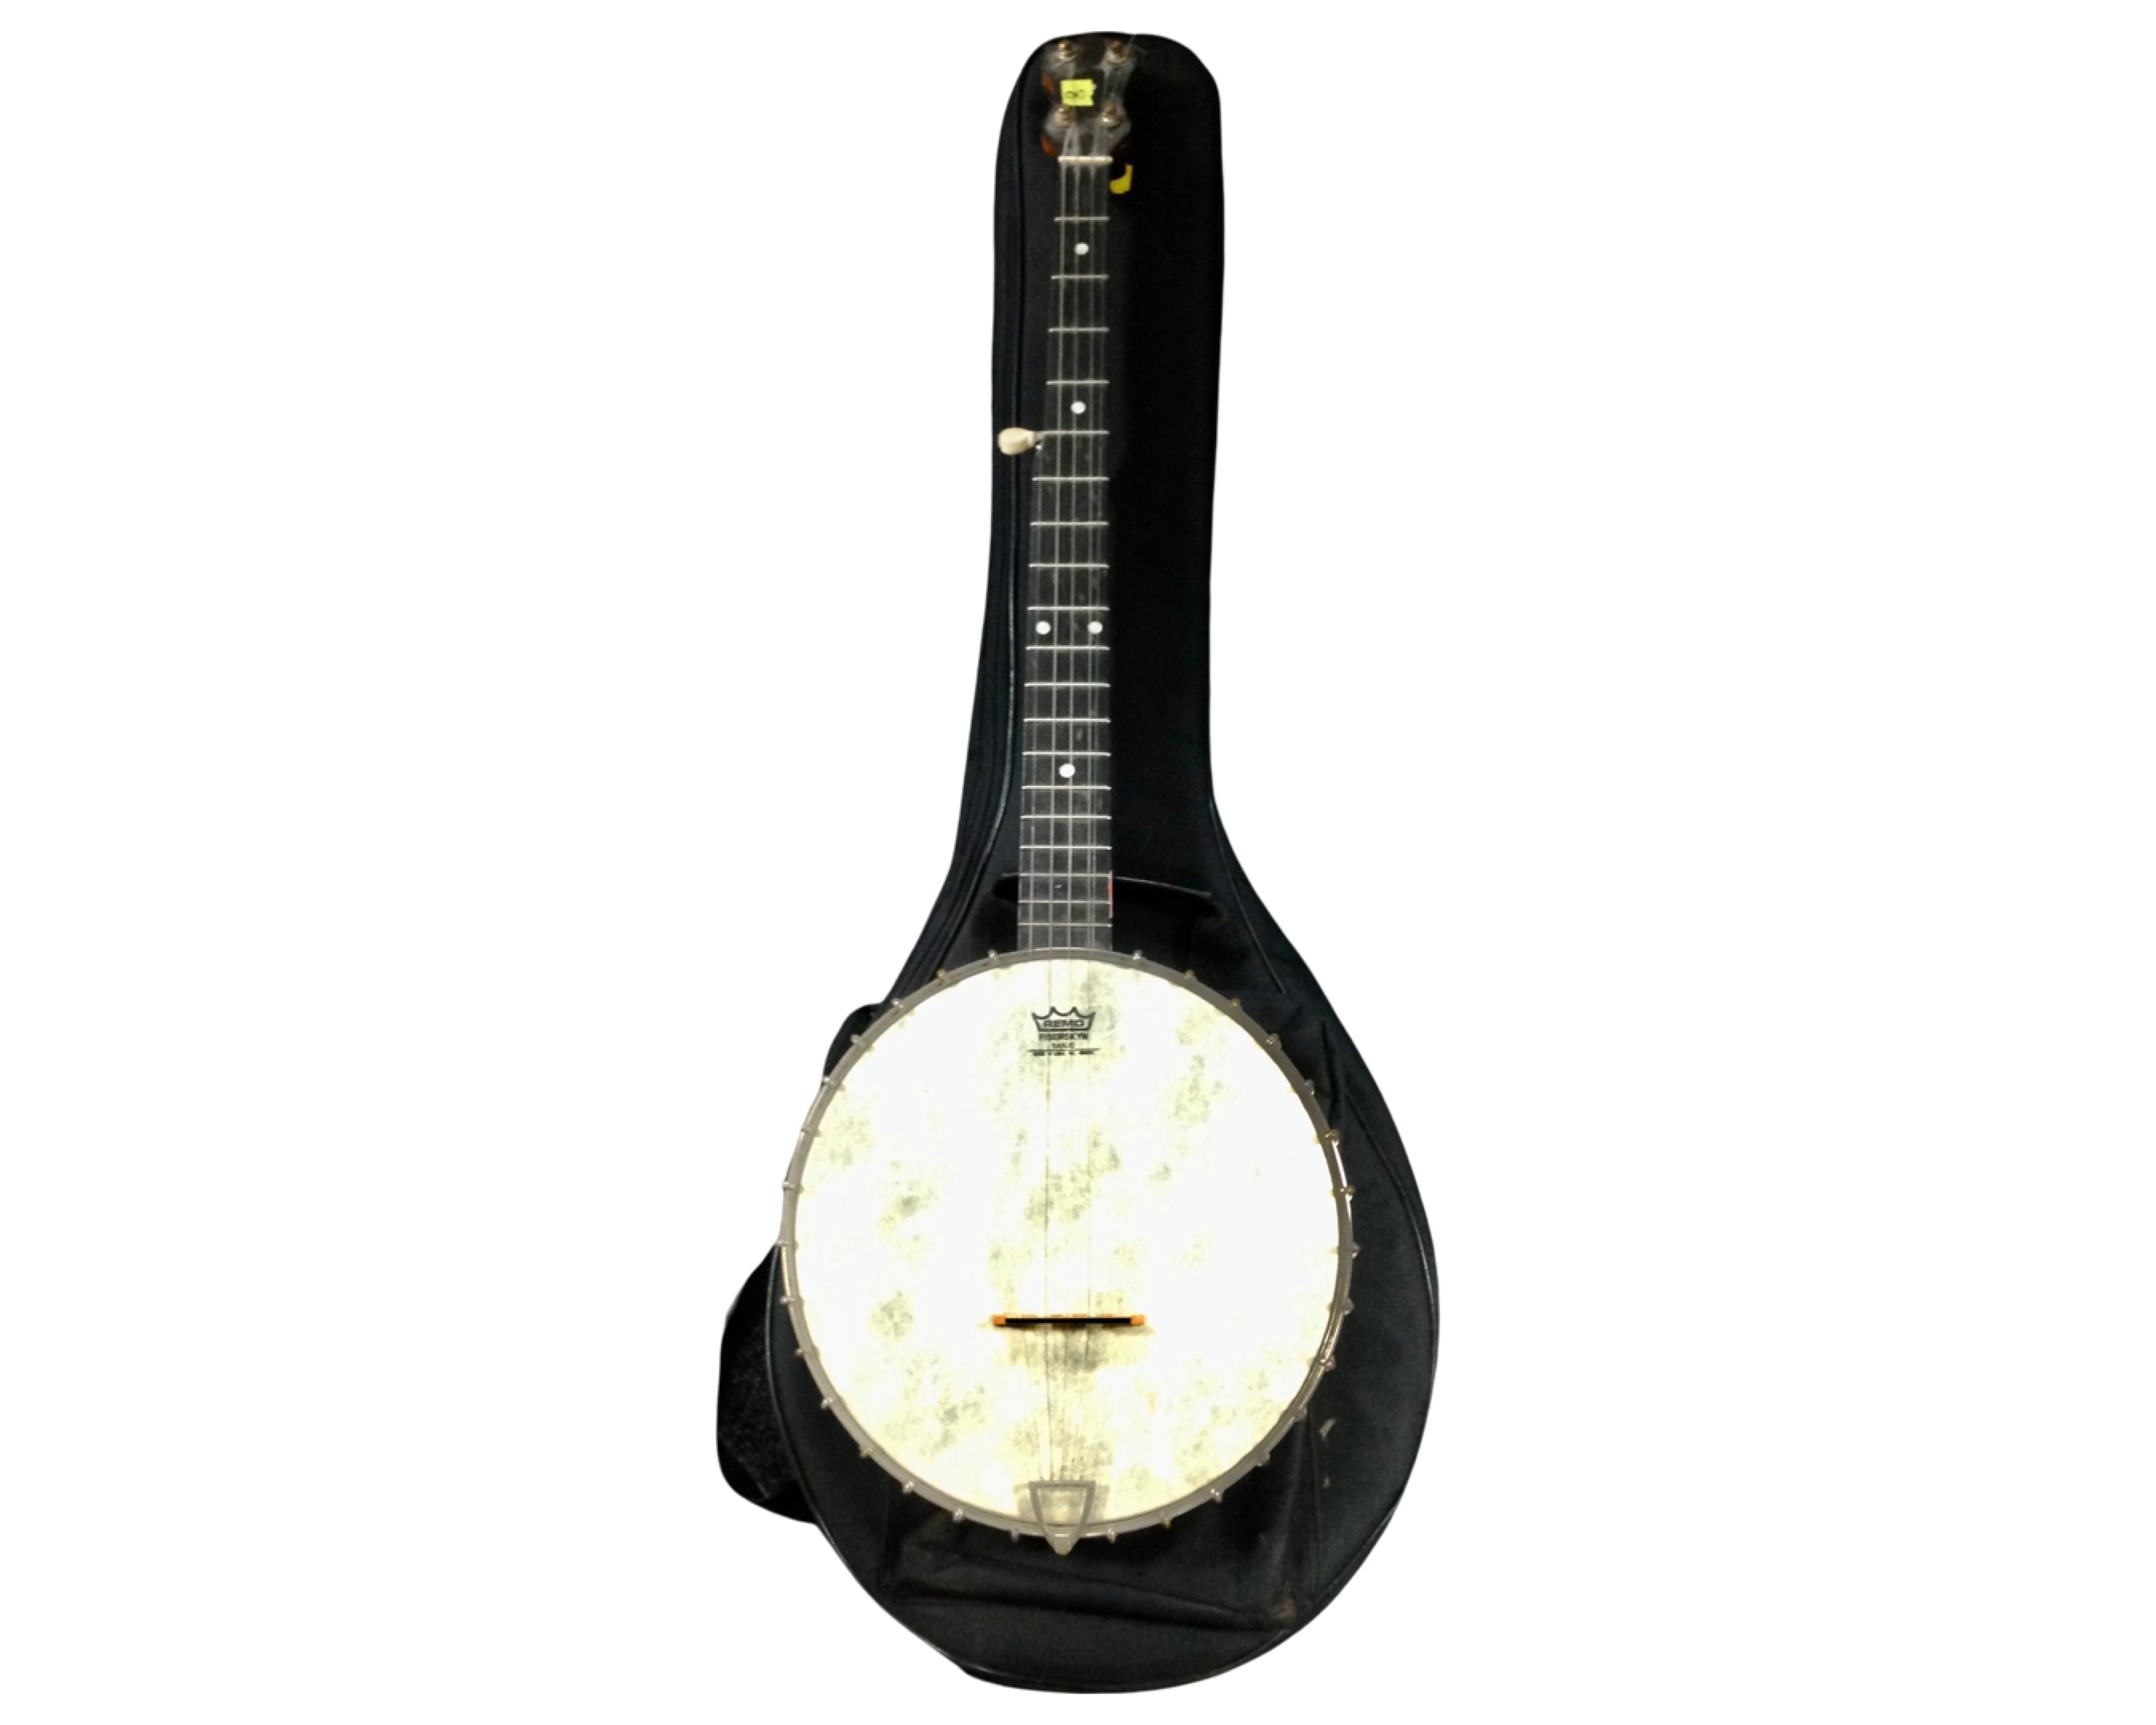 A five string open back banjo